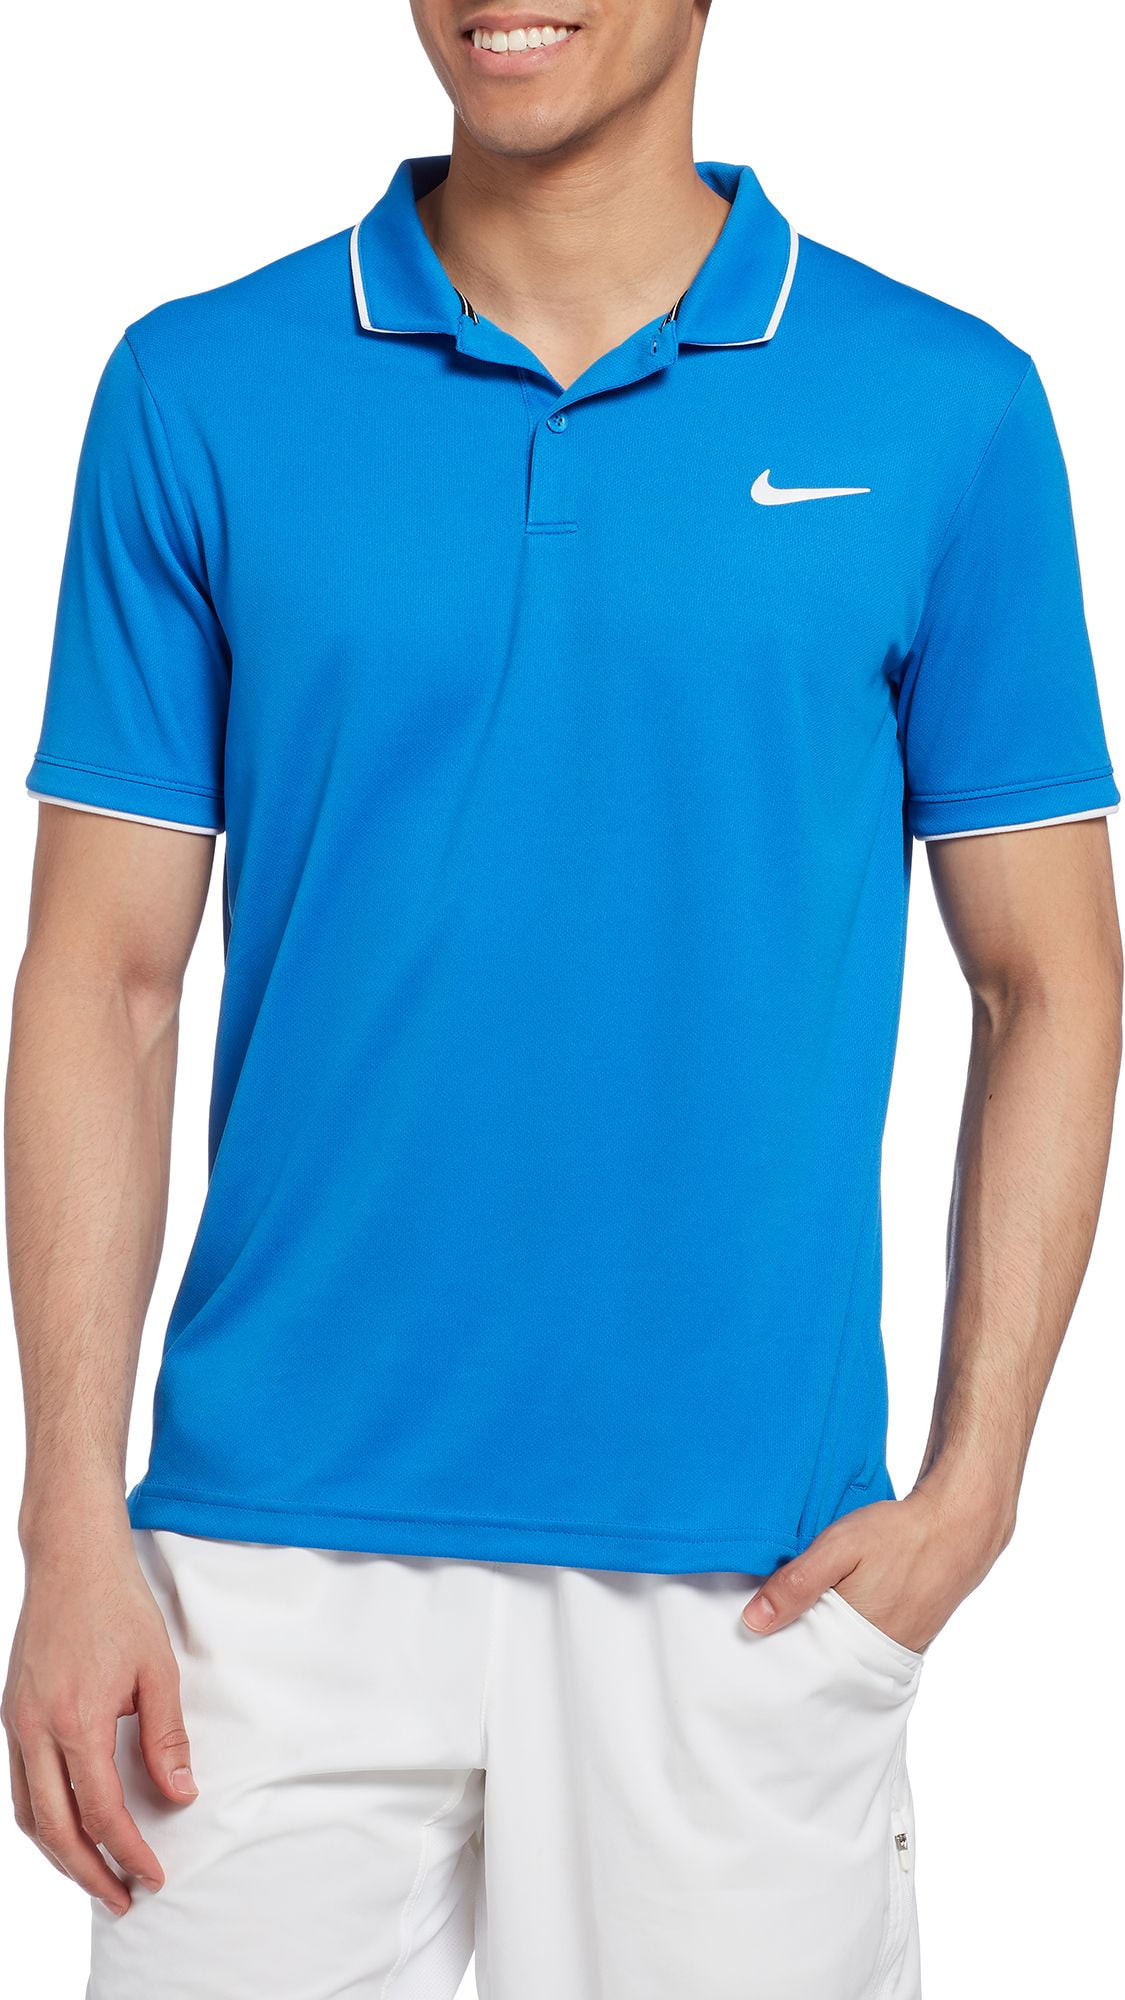 Nike - Nike Men's NikeCourt Dri-FIT Tennis Polo - Walmart.com - Walmart.com